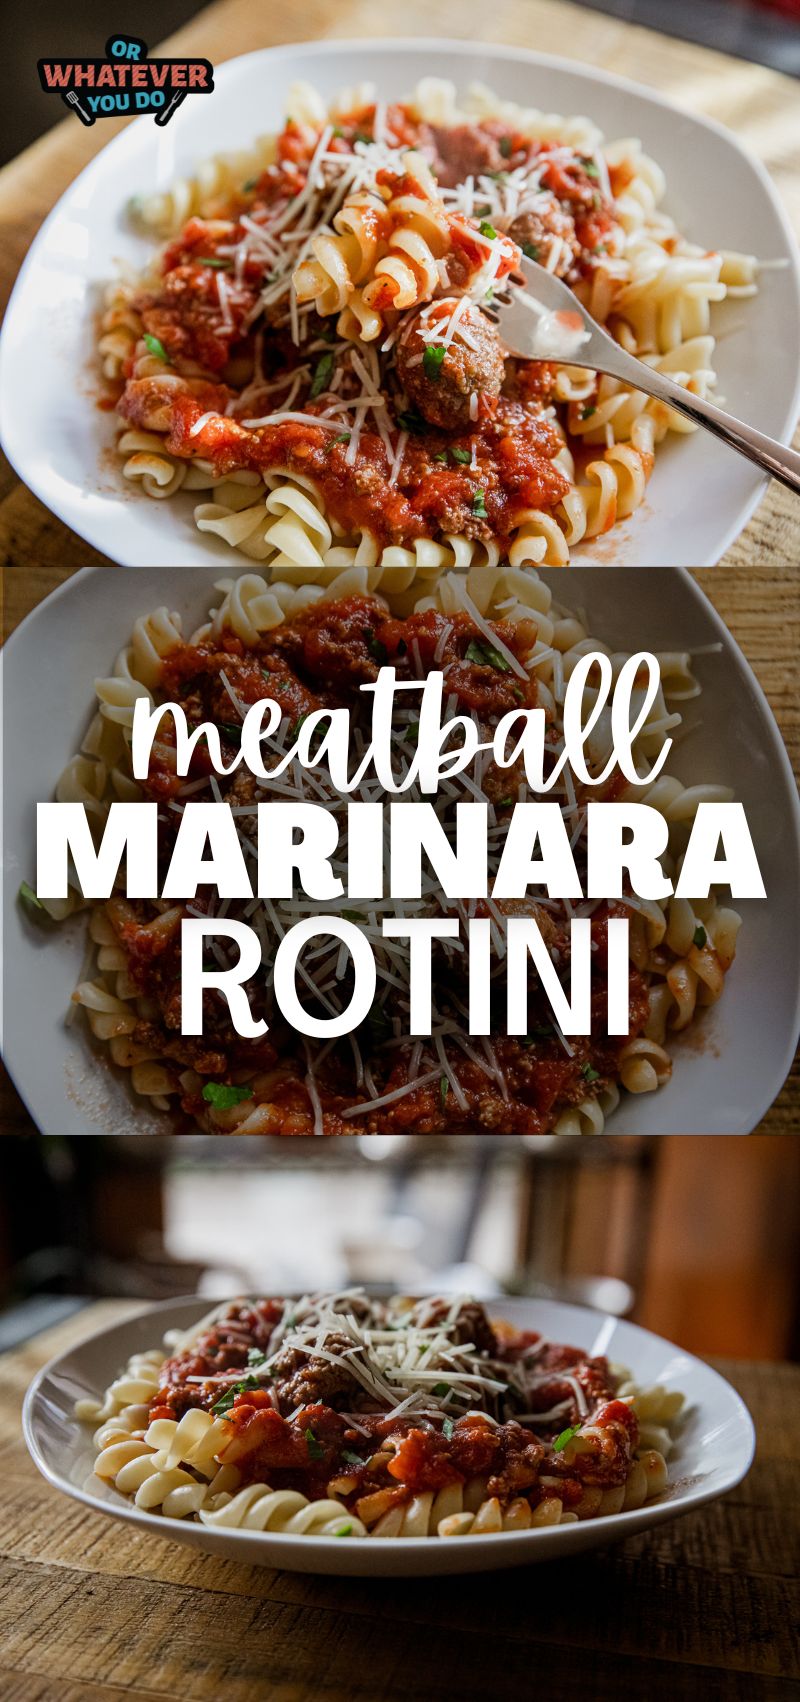 Meatball Marinara Rotini